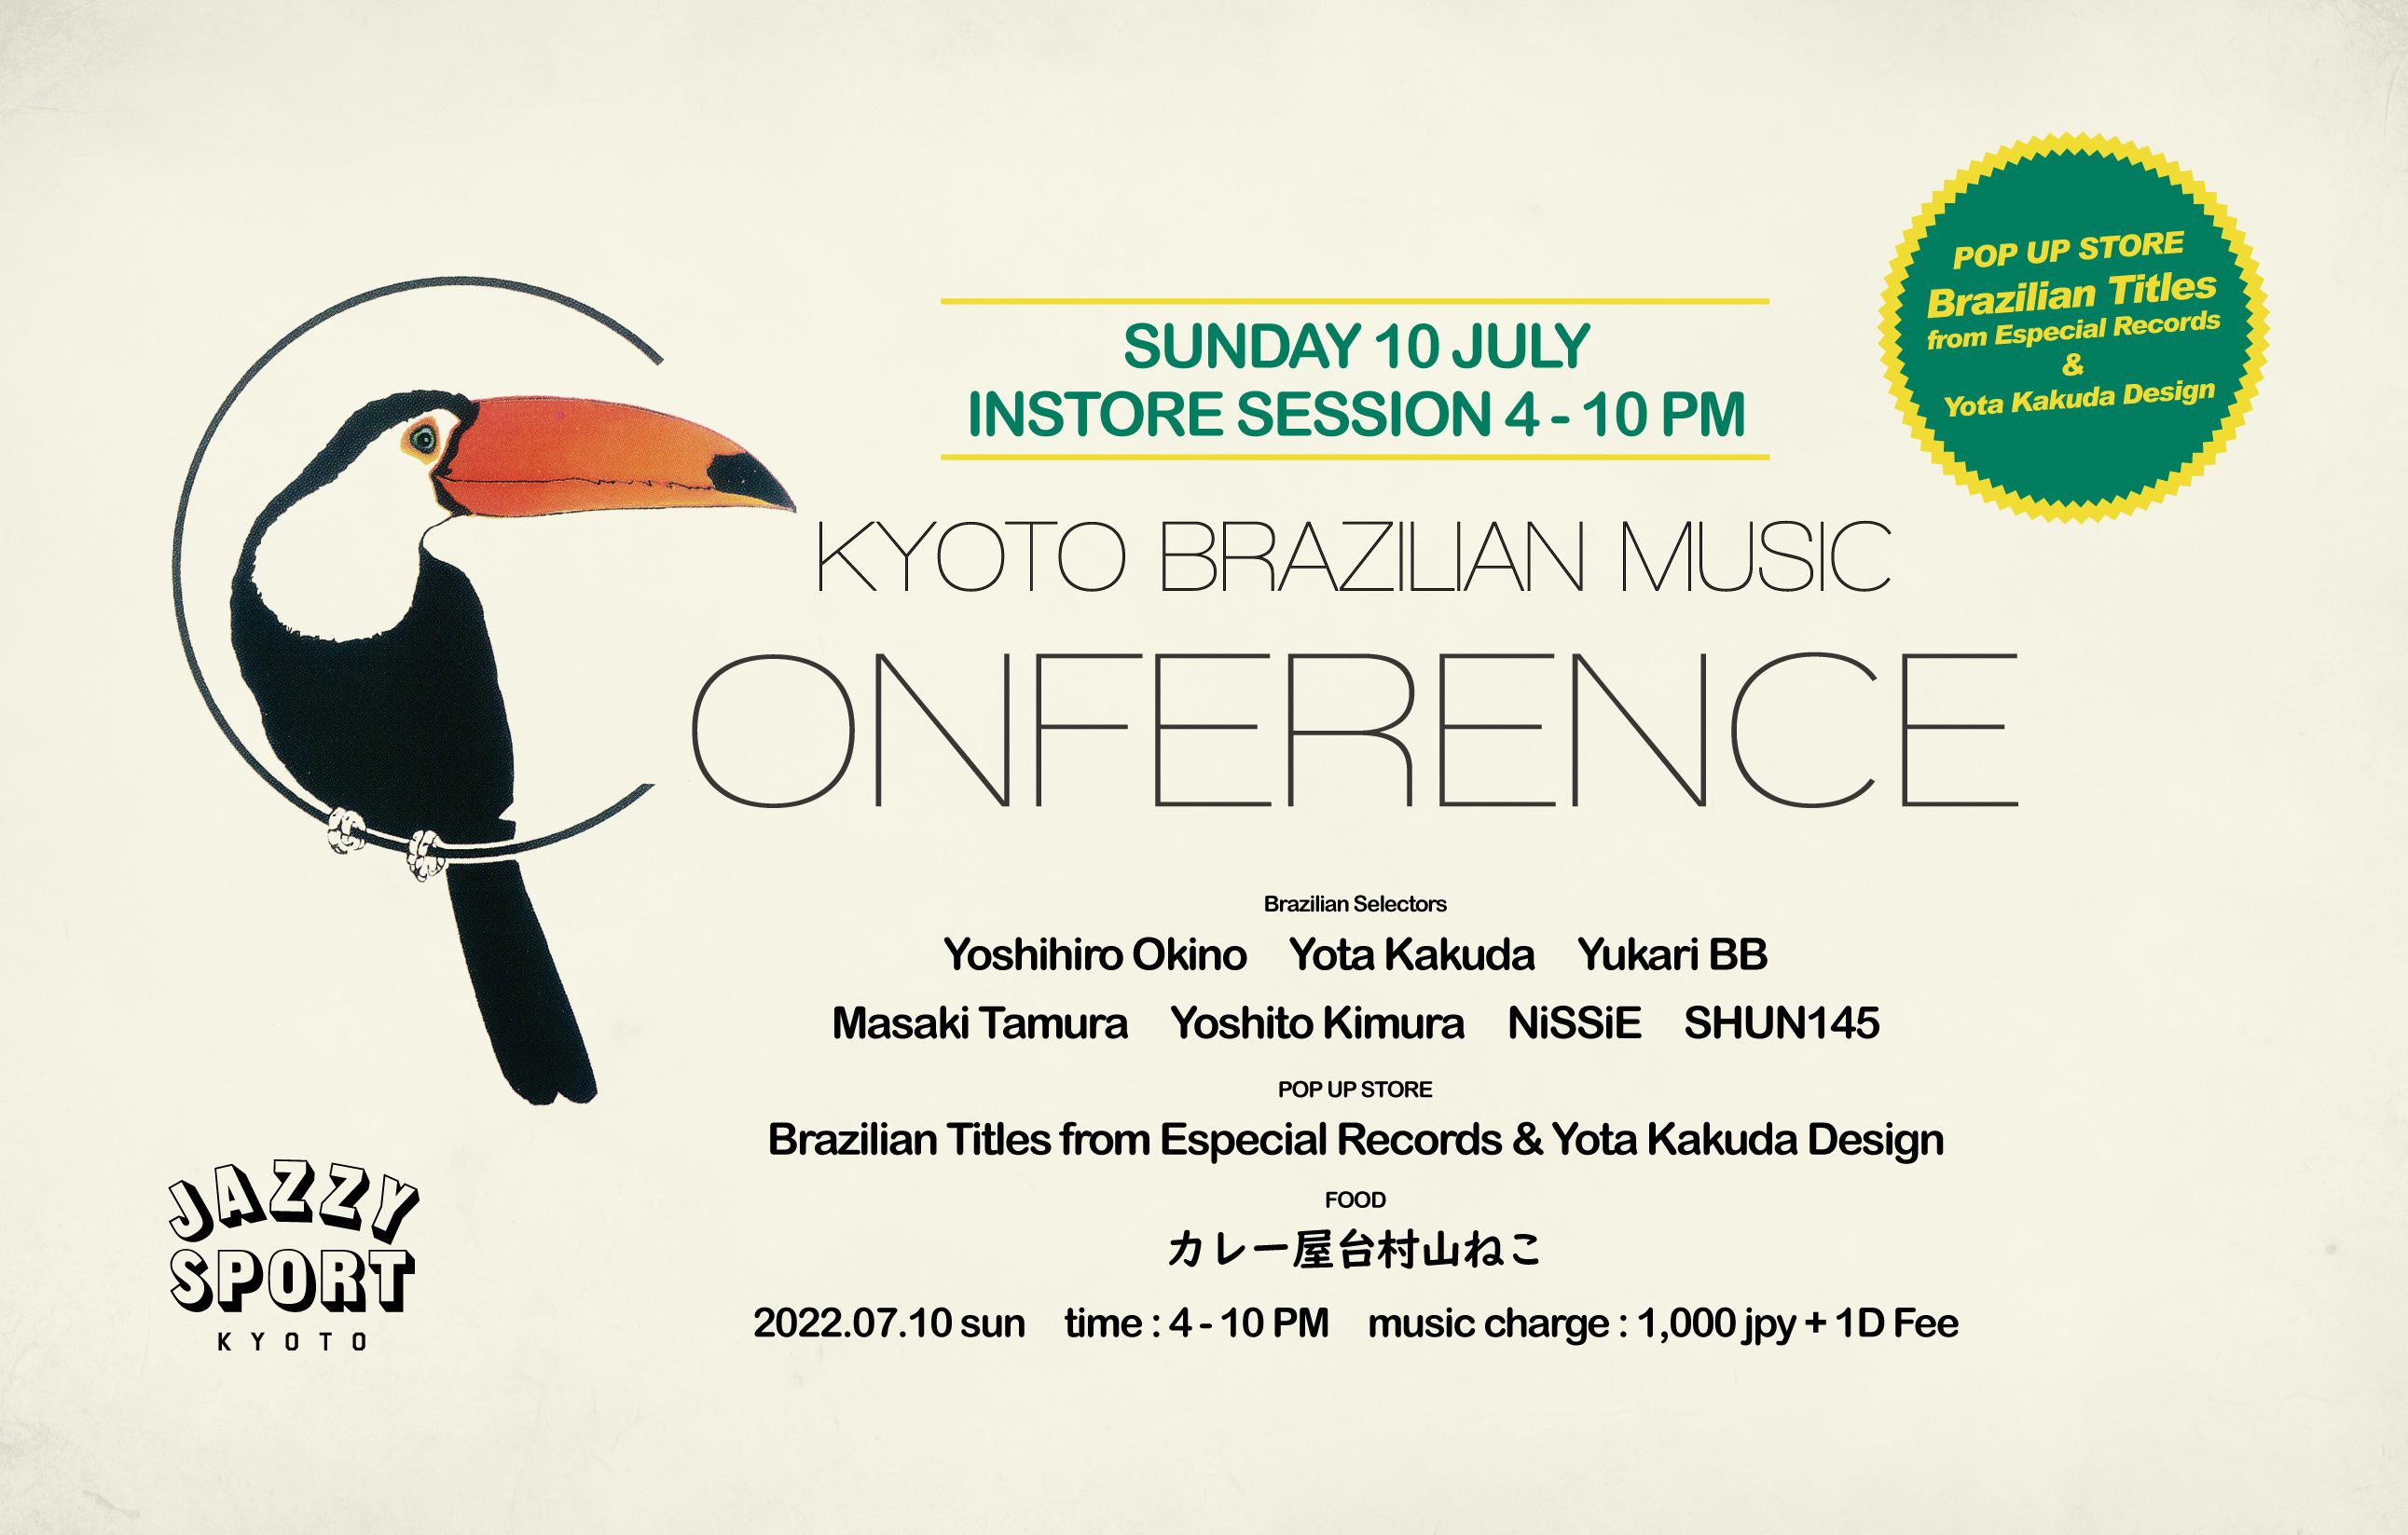 KYOTO BRAZILIAN MUSIC CONFERENCE 2022